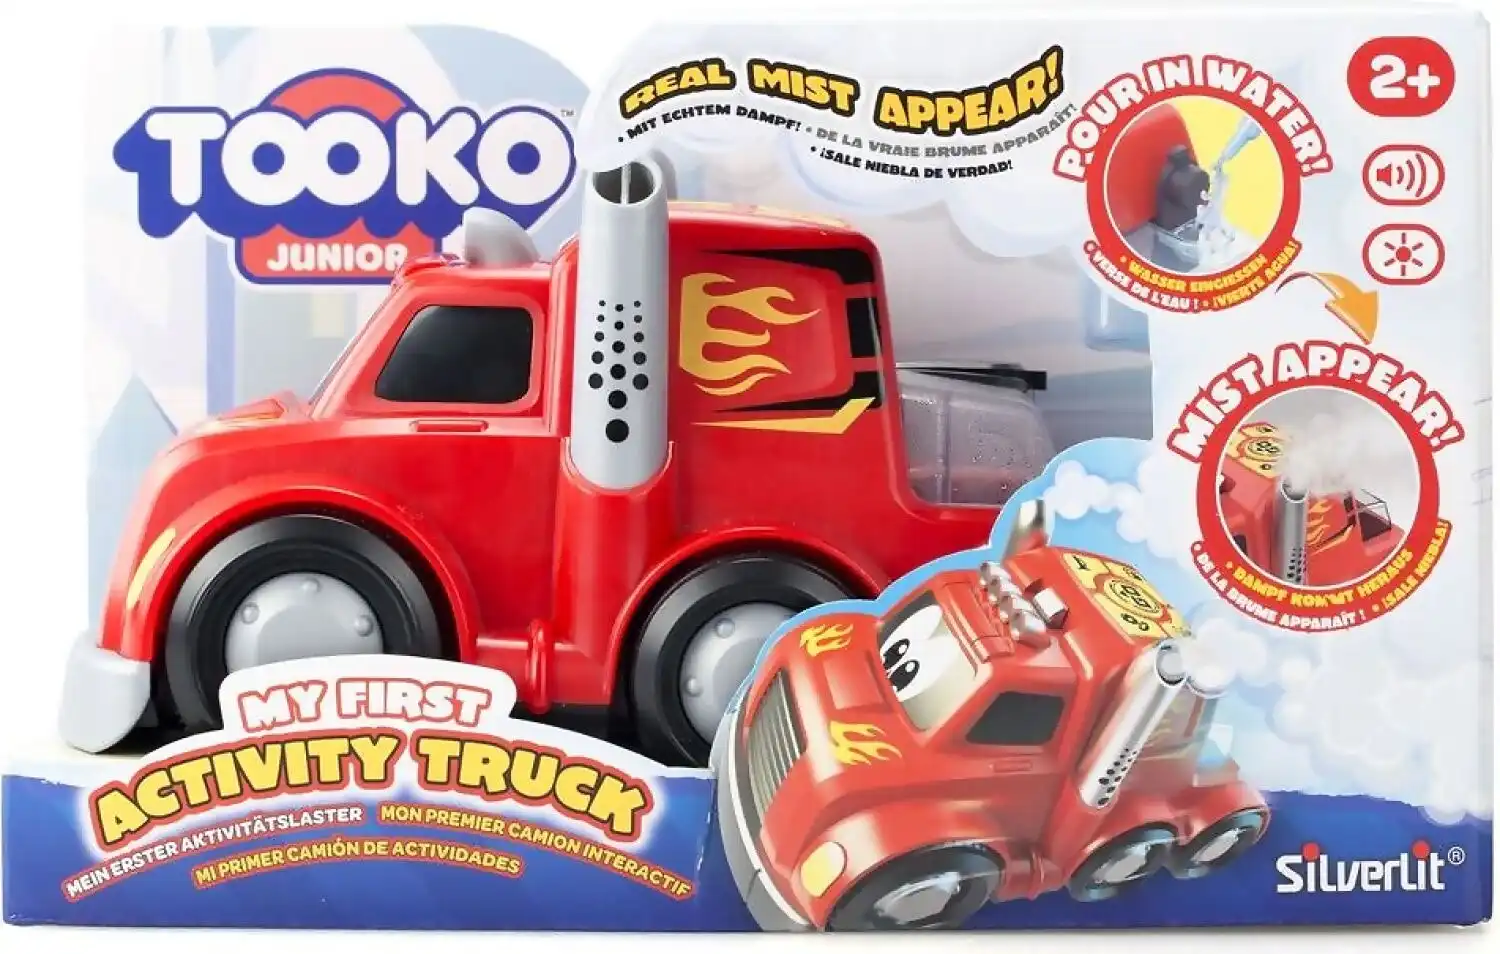 Tooko Junior - My First Activity Truck - Silverlit